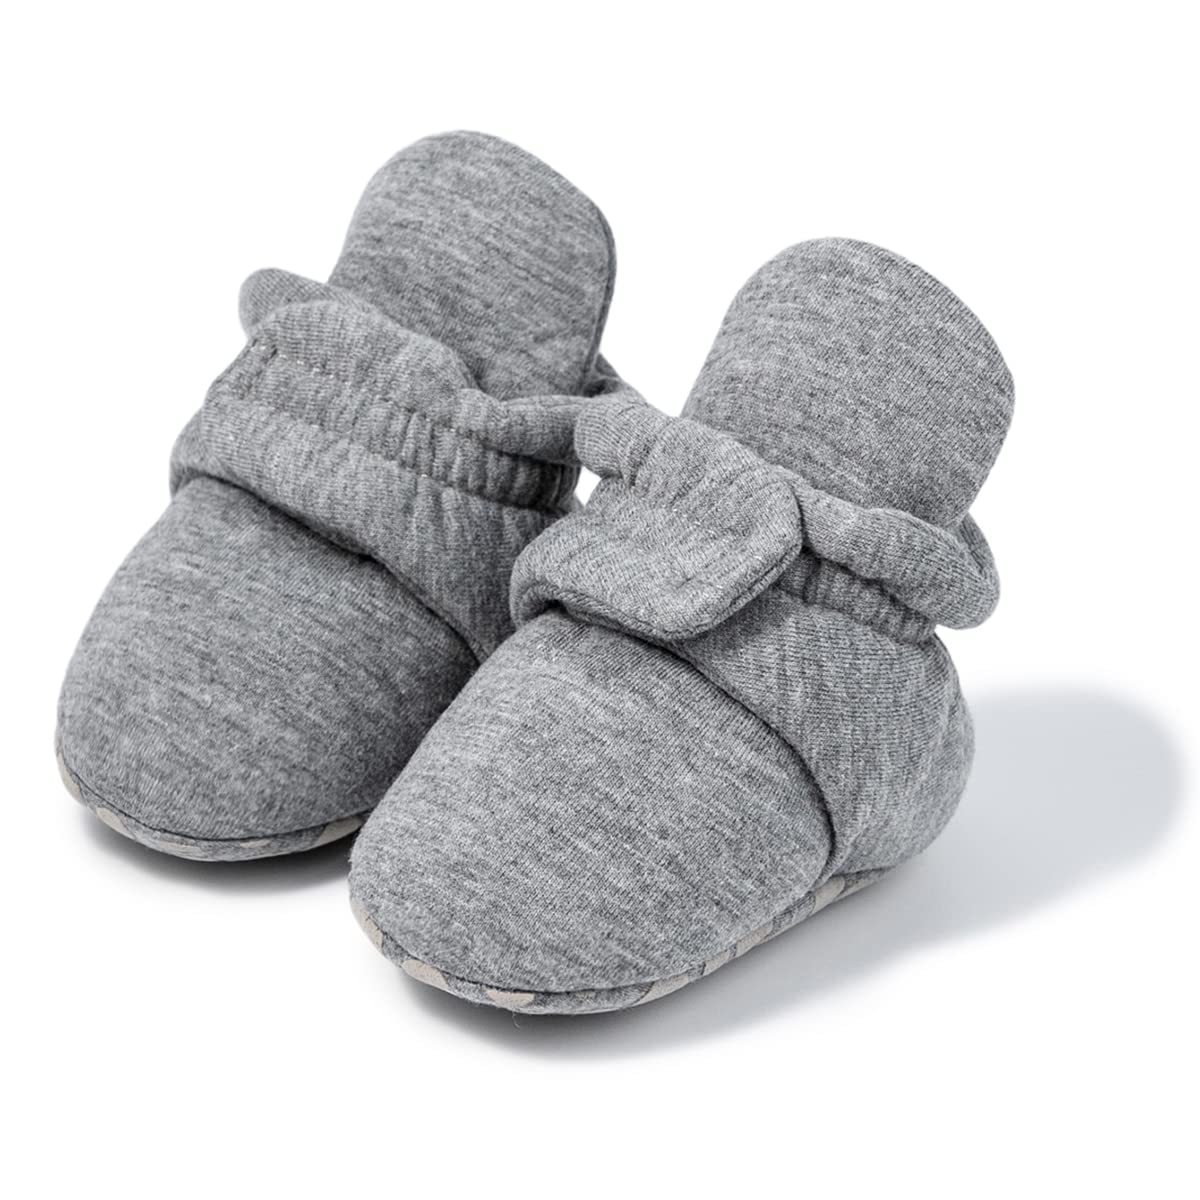 Babelvit Newborn Baby Boy Girl Soft Fleece Booties Stay On Infant Slippers Socks Shoe Non Skid Gripper Toddler First Walkers Win